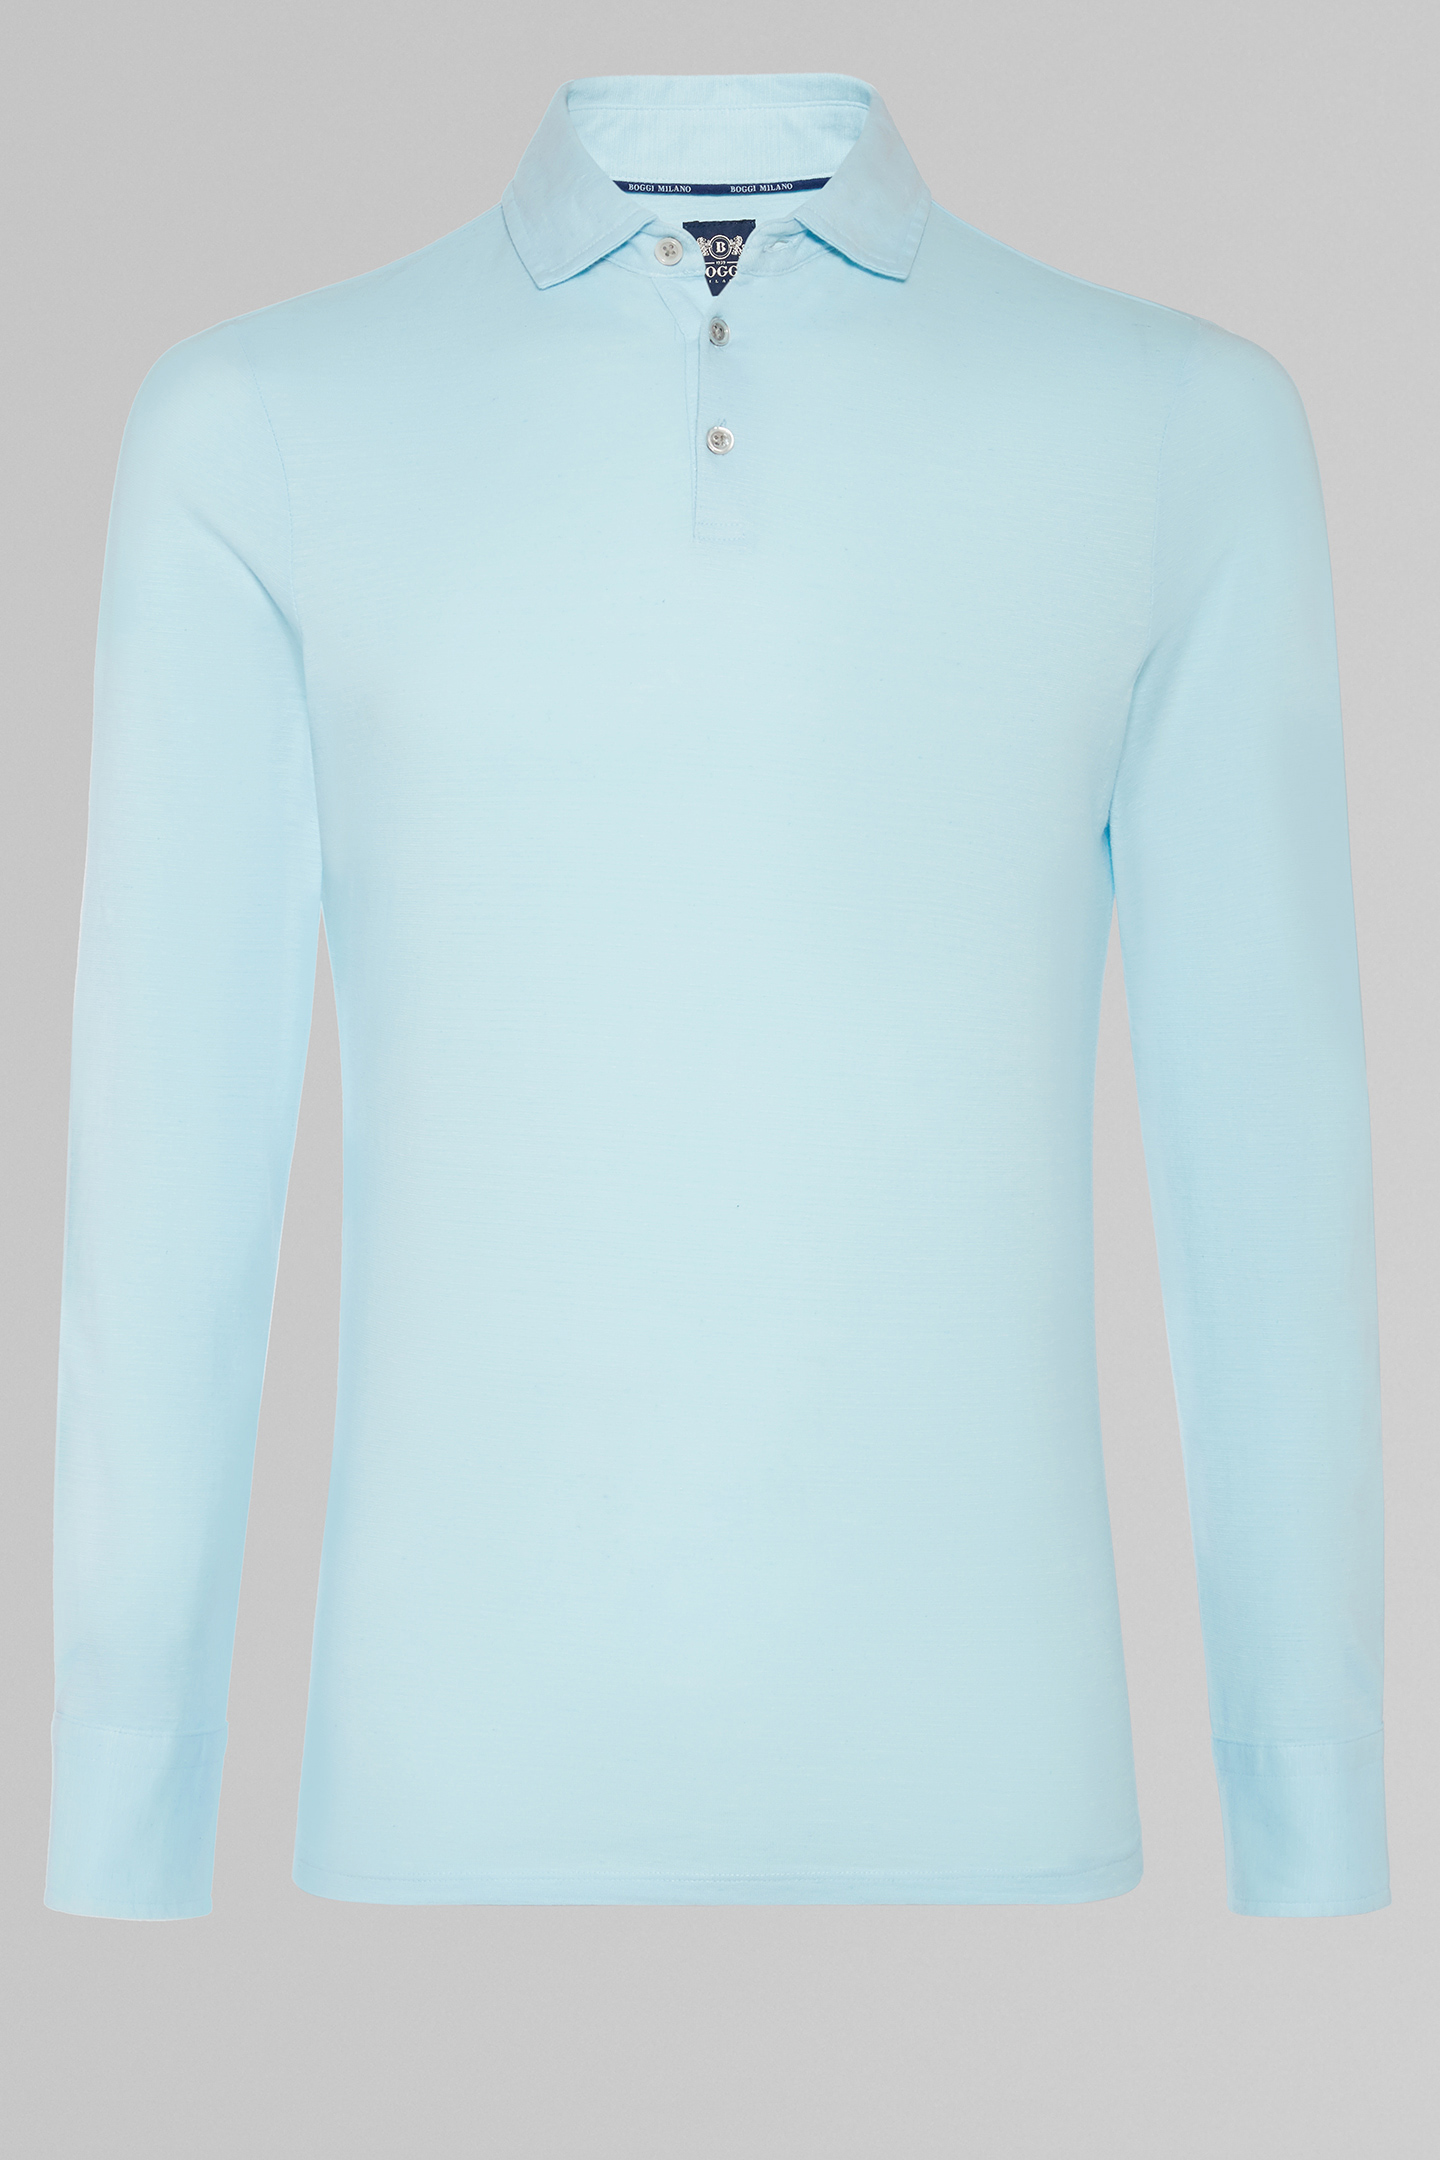 sky blue polo shirt